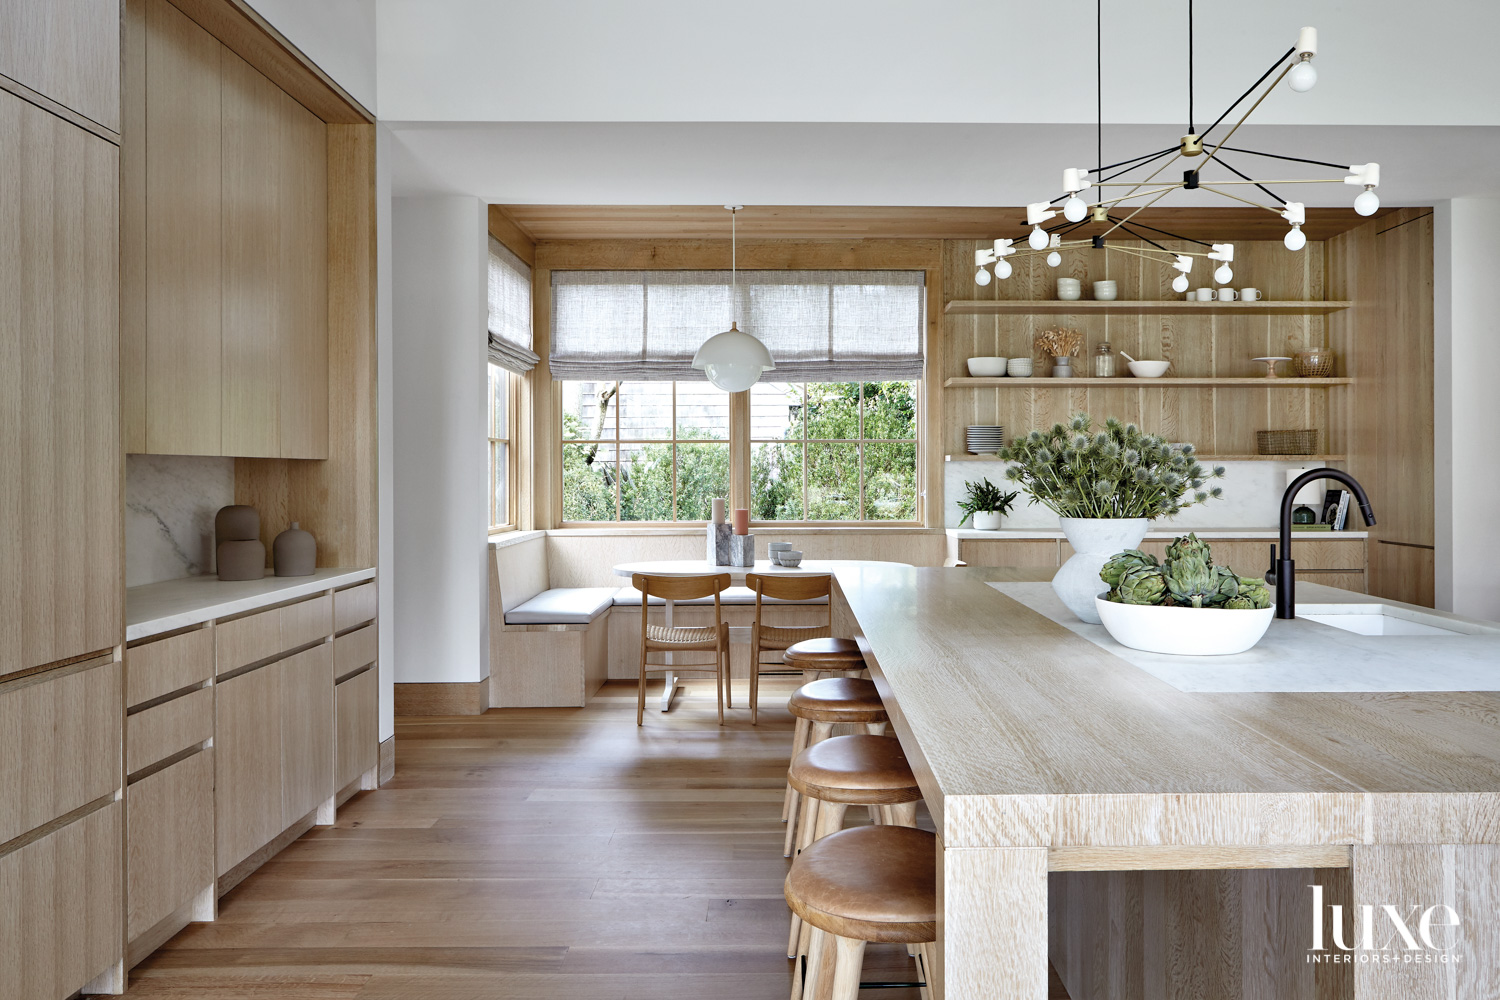 White oak island with bar stools in minimalist kitchen